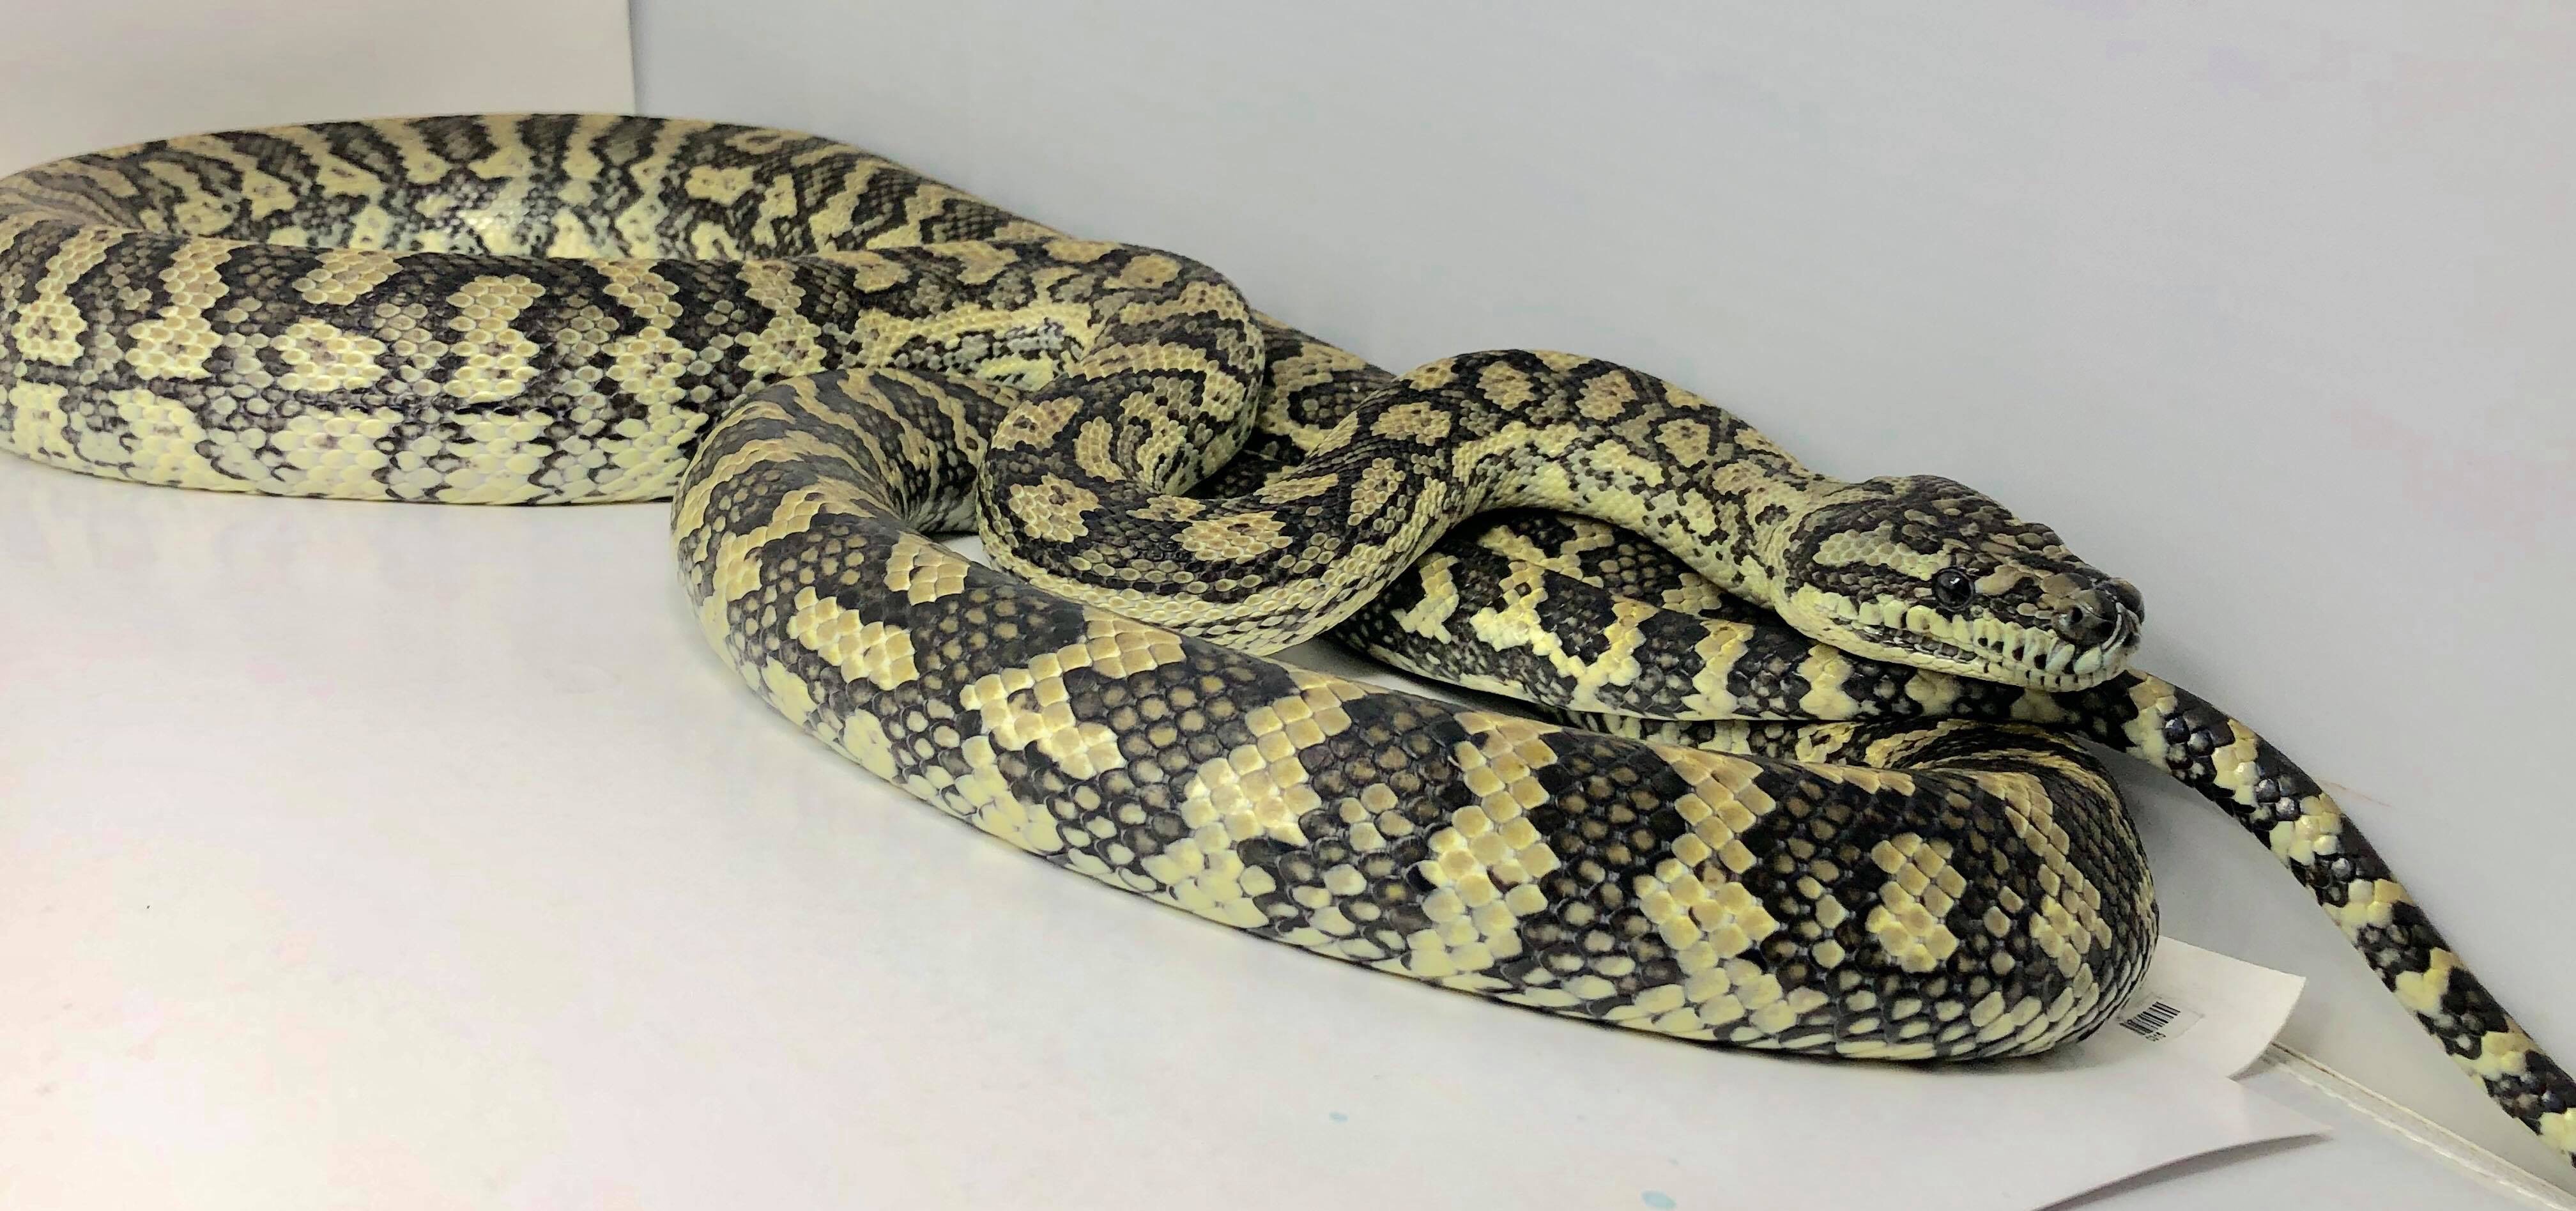 Caramel Coastal Carpet Python by Good Guy Reptile Family